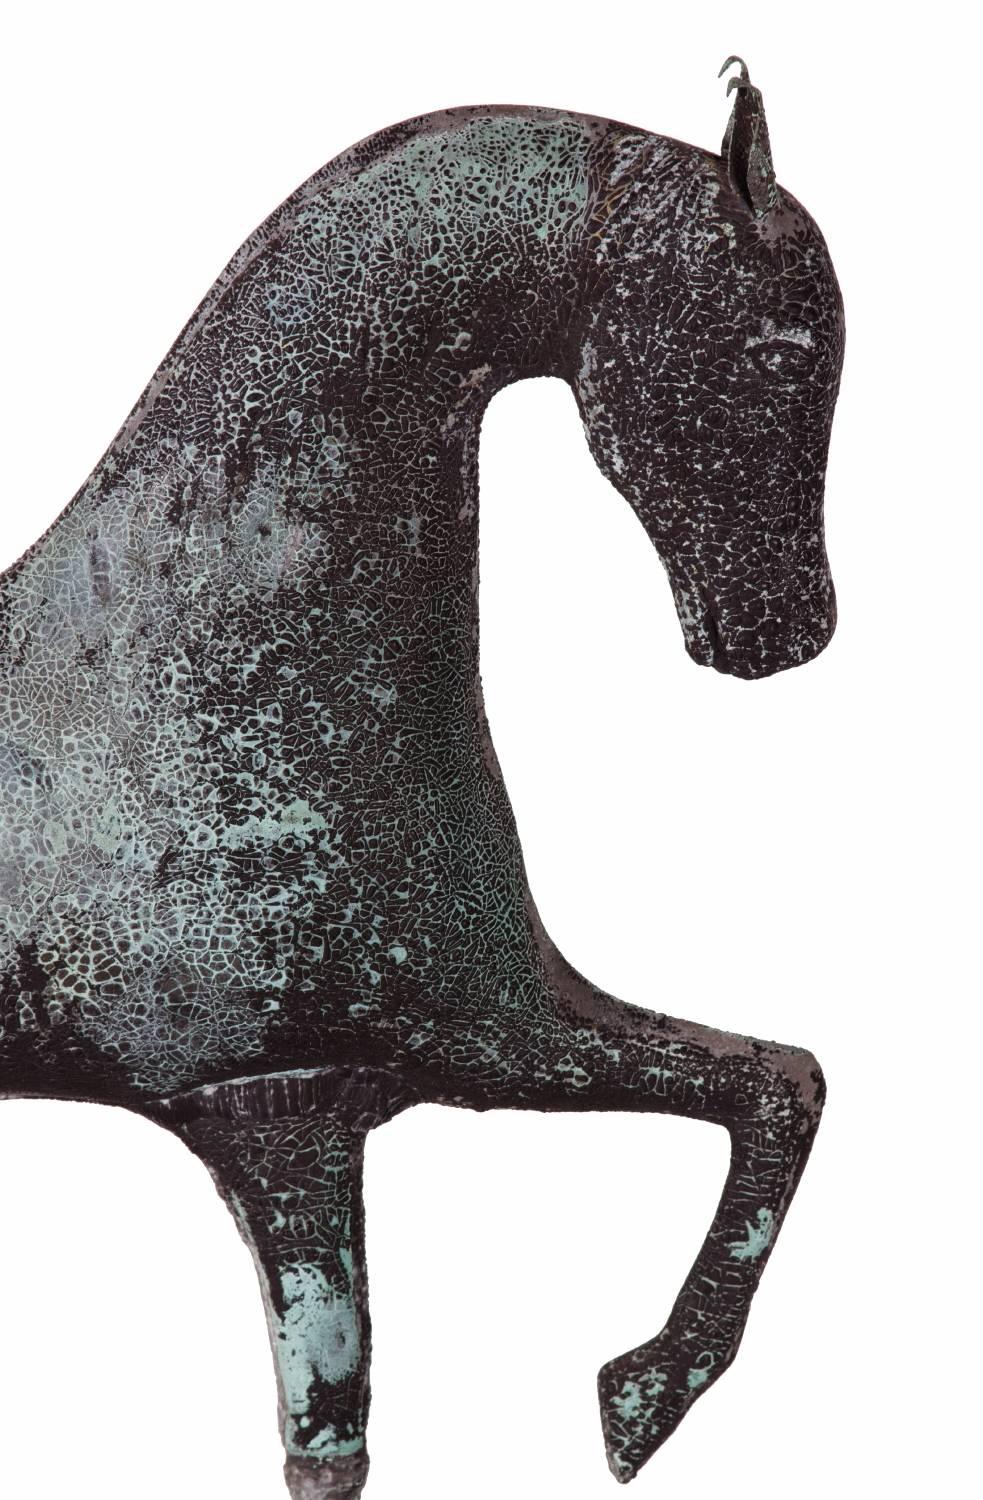 American Prancing Horse Weathervane, Attributed to Jewel & Co., Waltham, Massachusetts